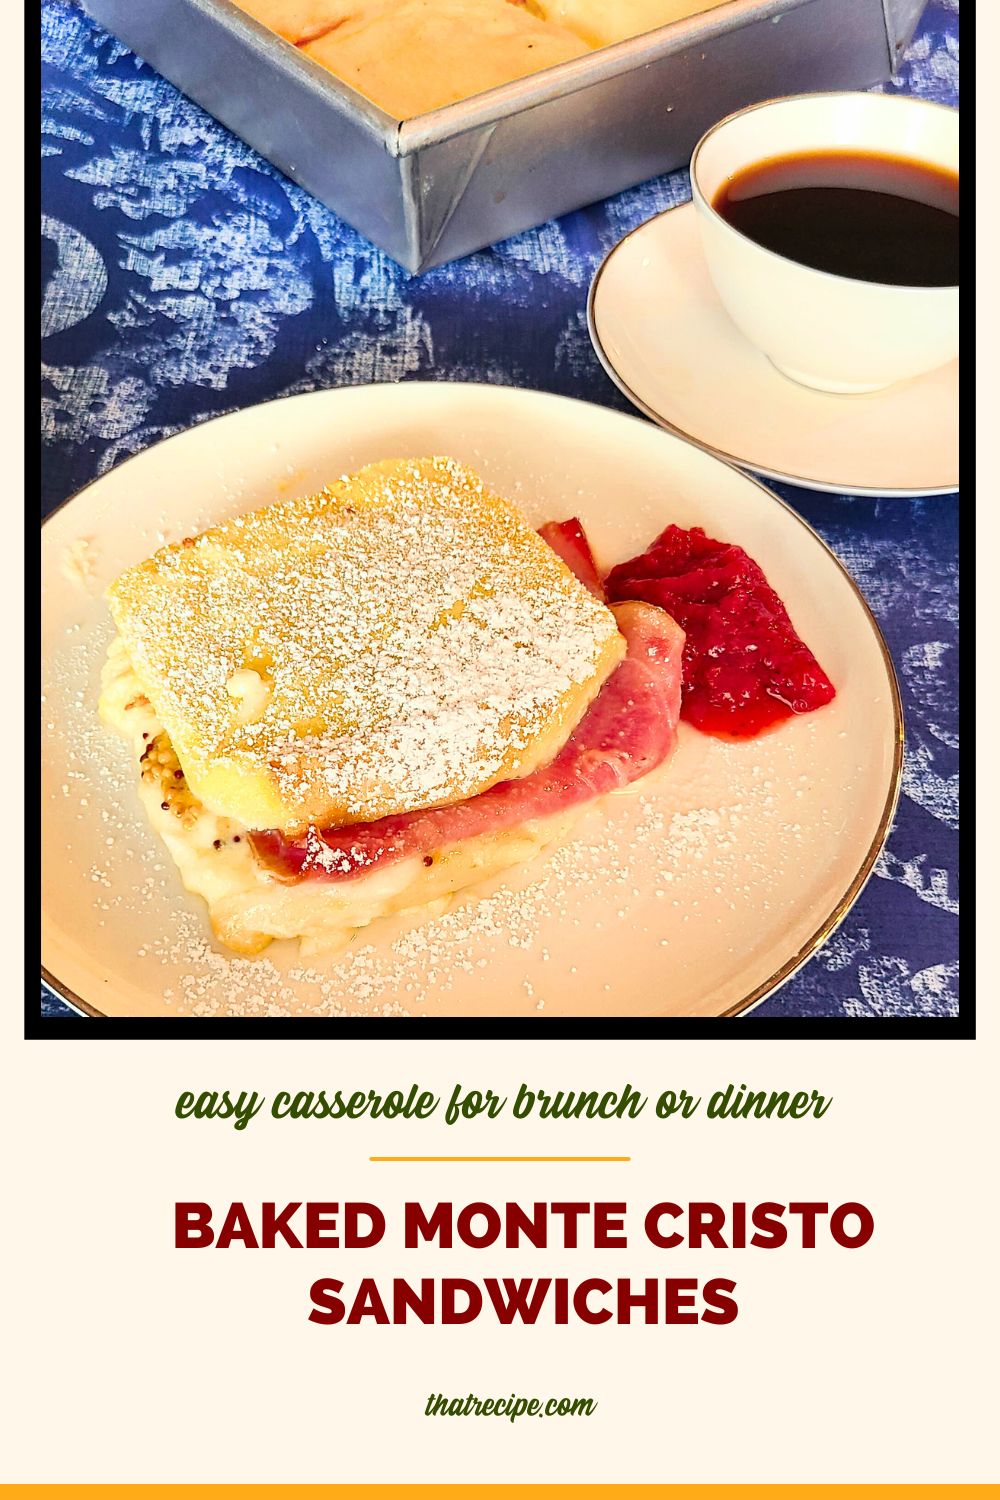 Monte Cristo Sandwich covered in powdered sugar with strawberry jam